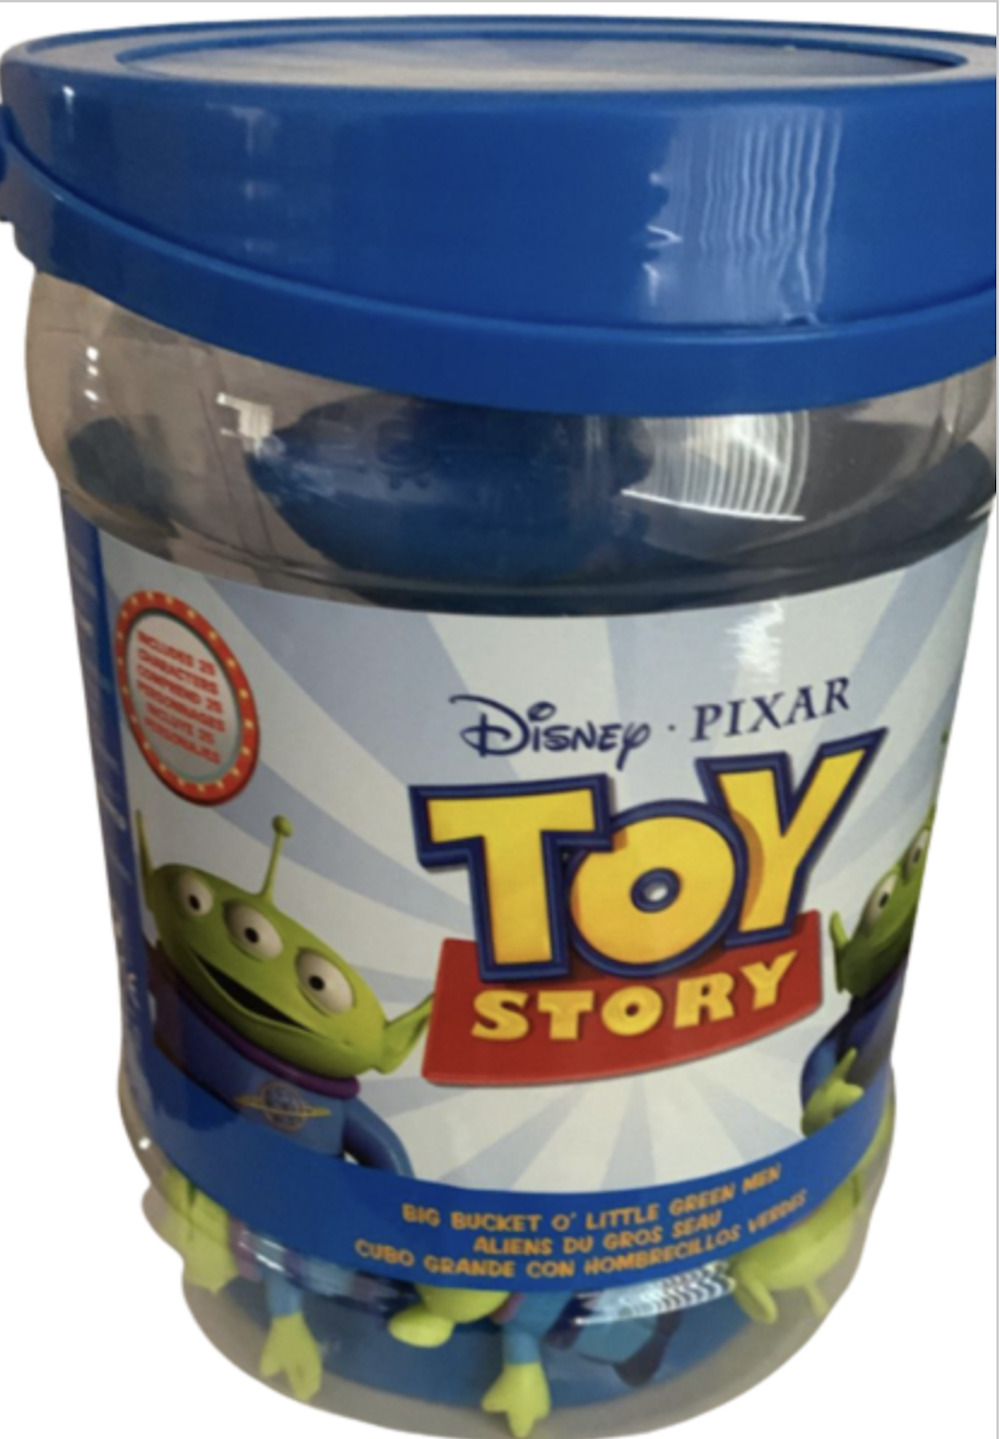 Disney Parks Pixar Toy Story Aliens Big Bucket O\' Little Green Men Complete 25